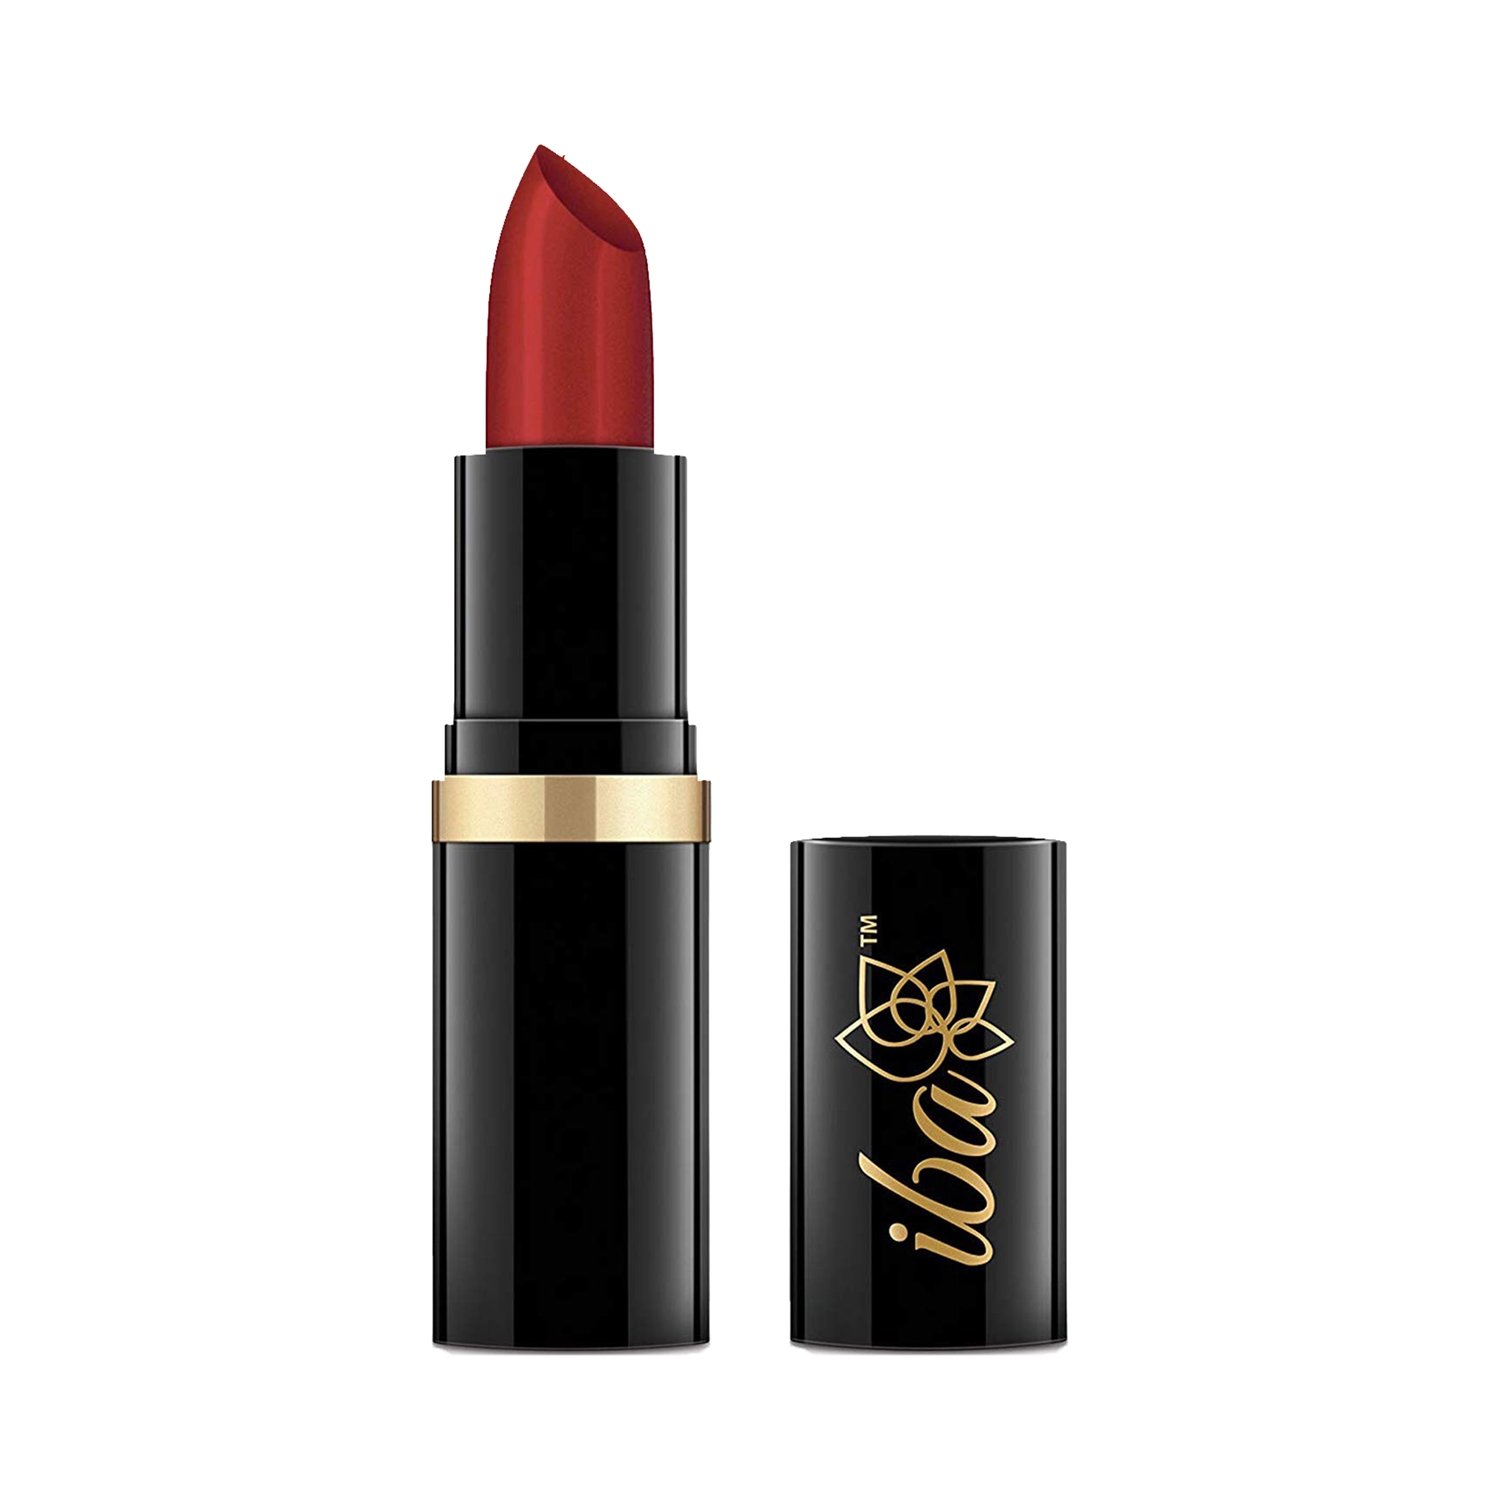 Iba | Iba Pure Lips Moisture Rich Lipstick - A60 Cherry Red (4g)